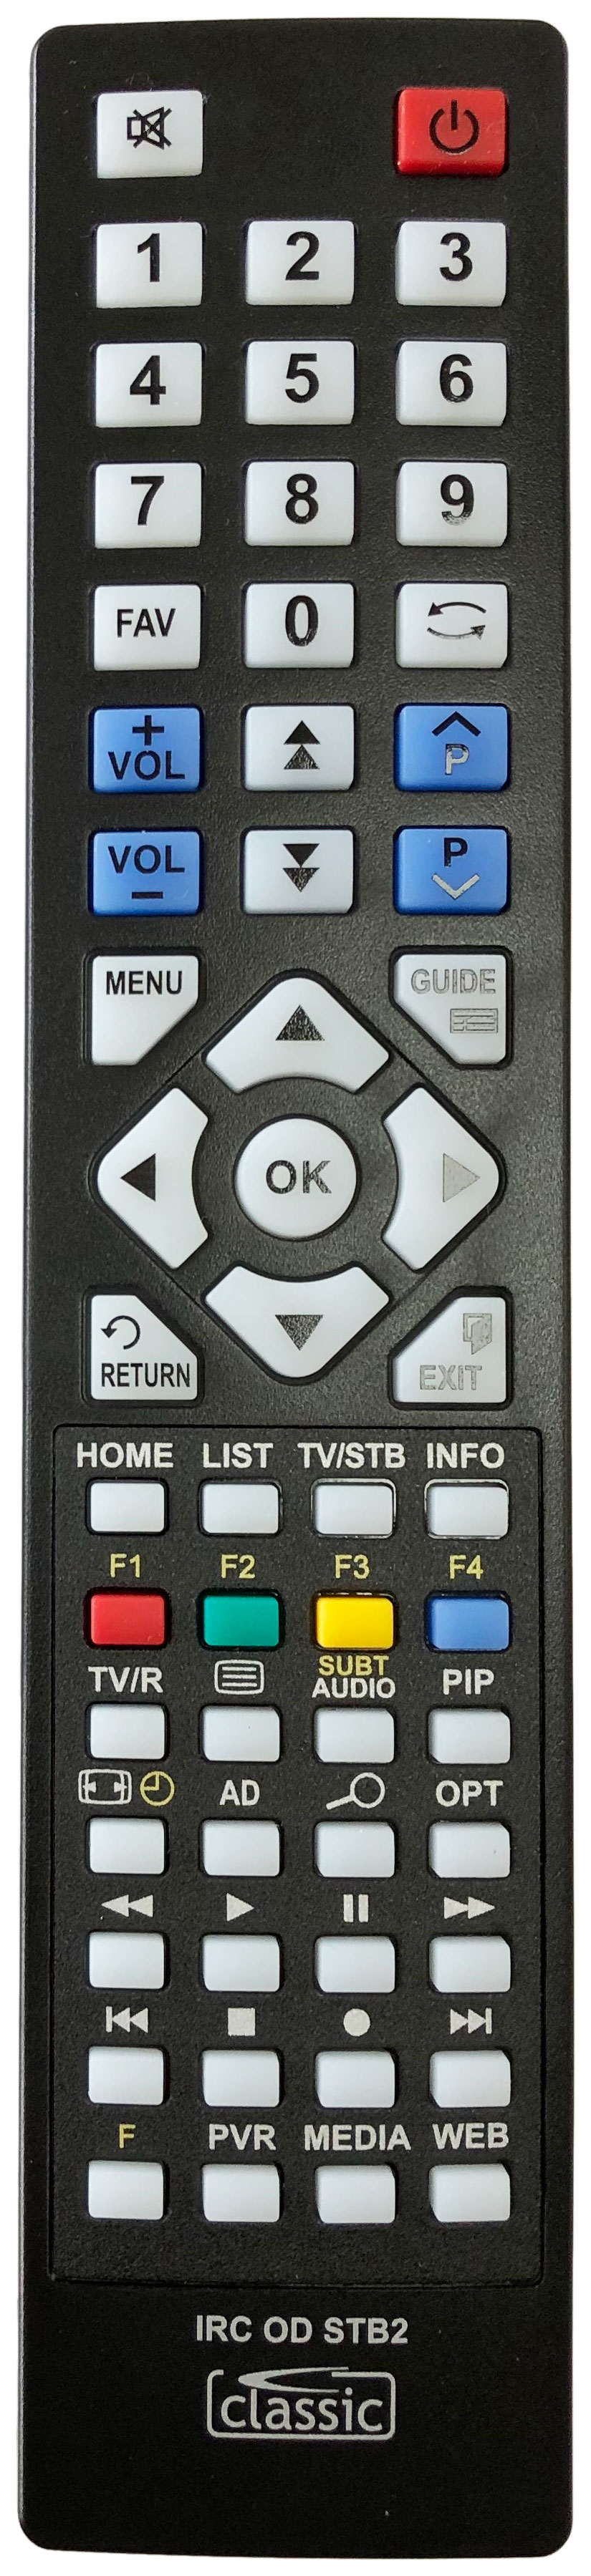 MANHATTAN HDR-S500 Remote Control 